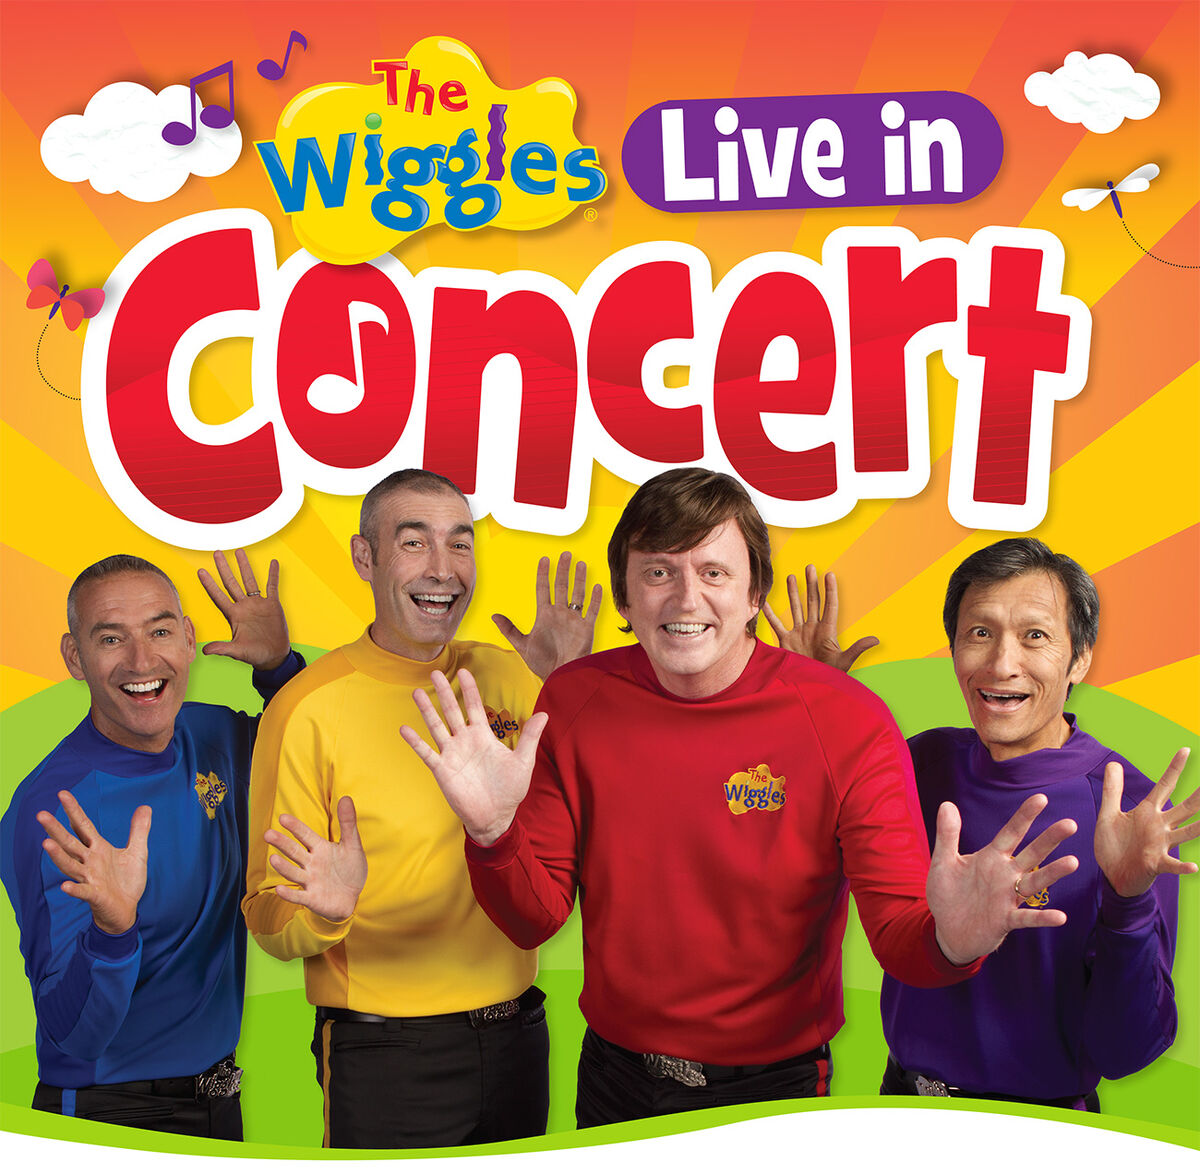 The Wiggles 1998 Tour, Wigglepedia